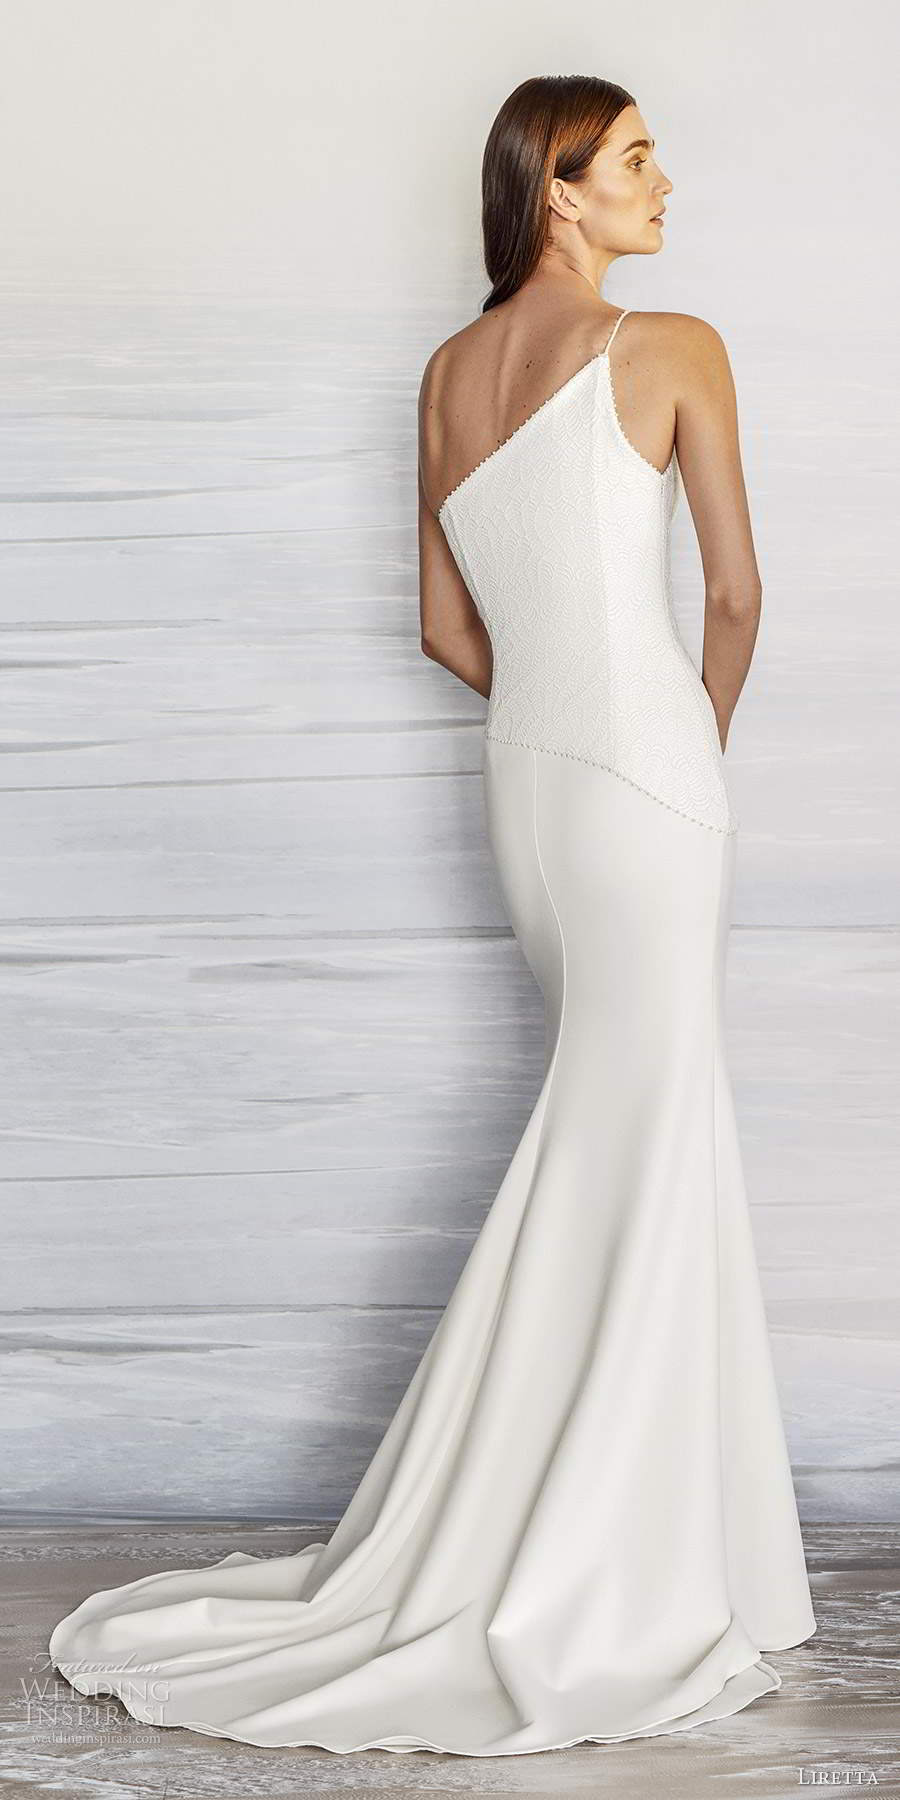 liretta 2021 bridal one shoulder strap embellished bodice clean minimalist sheath wedding dress slit skirt sweep train (4) bv